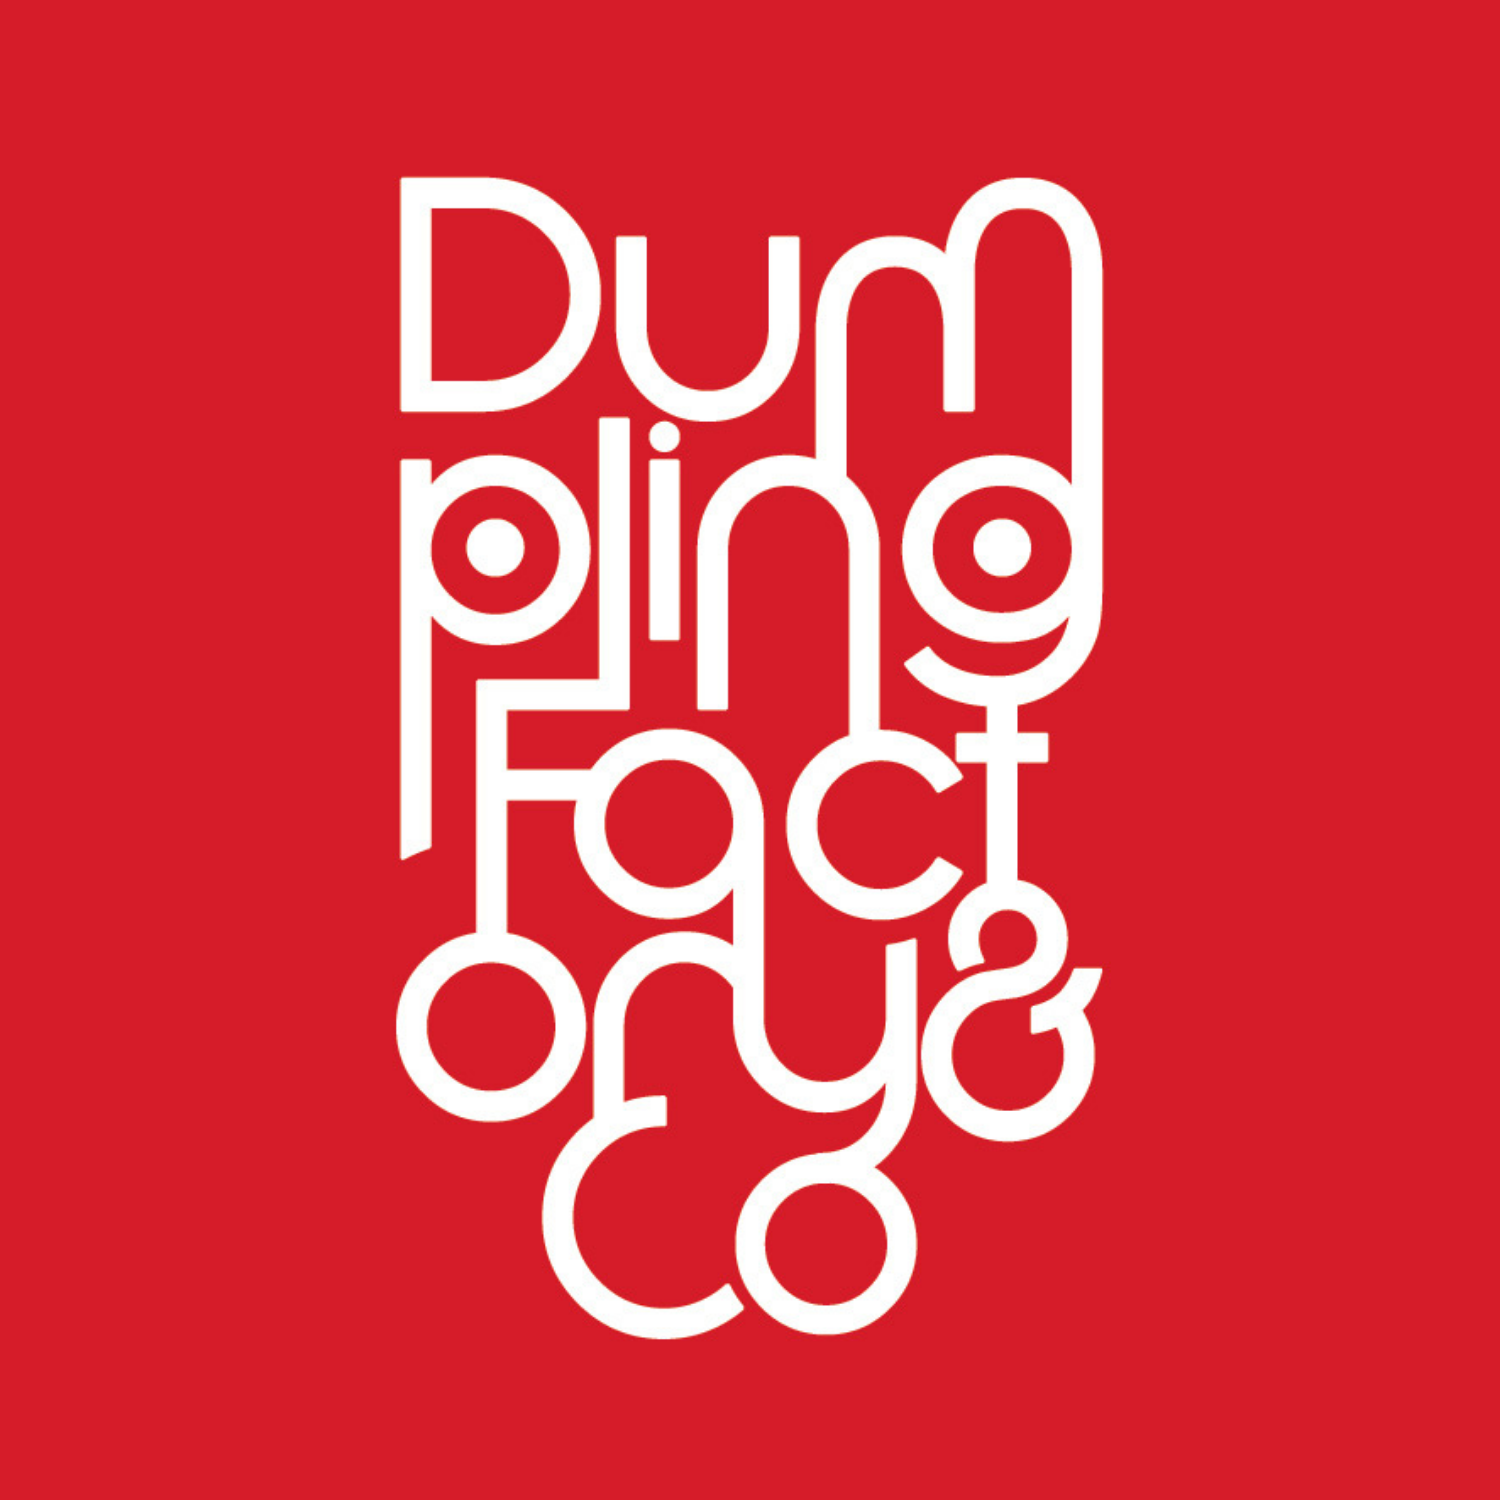 Dumpling Factory & Co